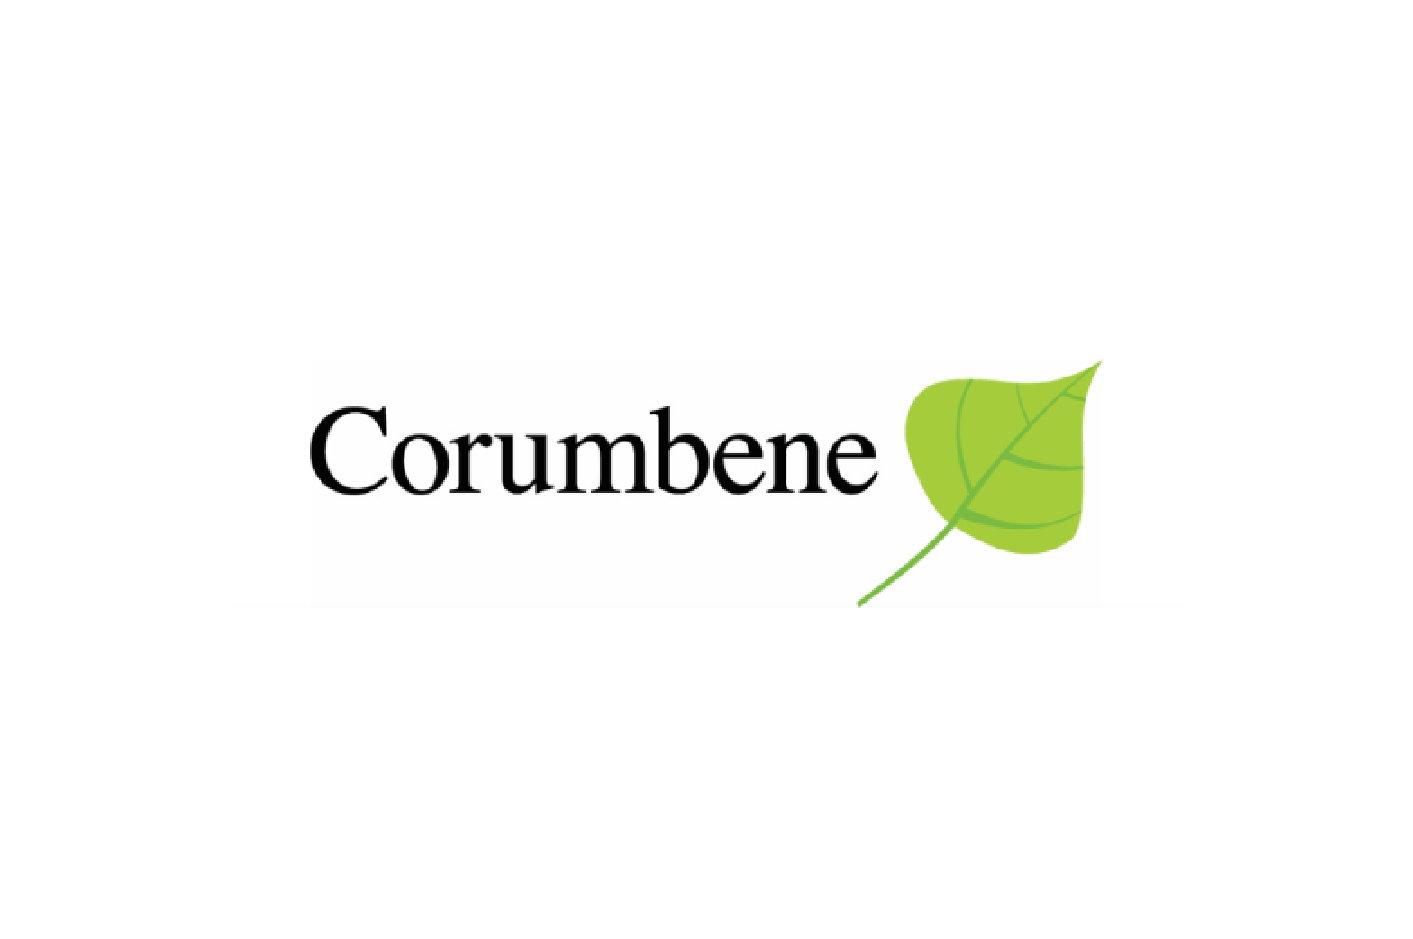 Corumbene Care